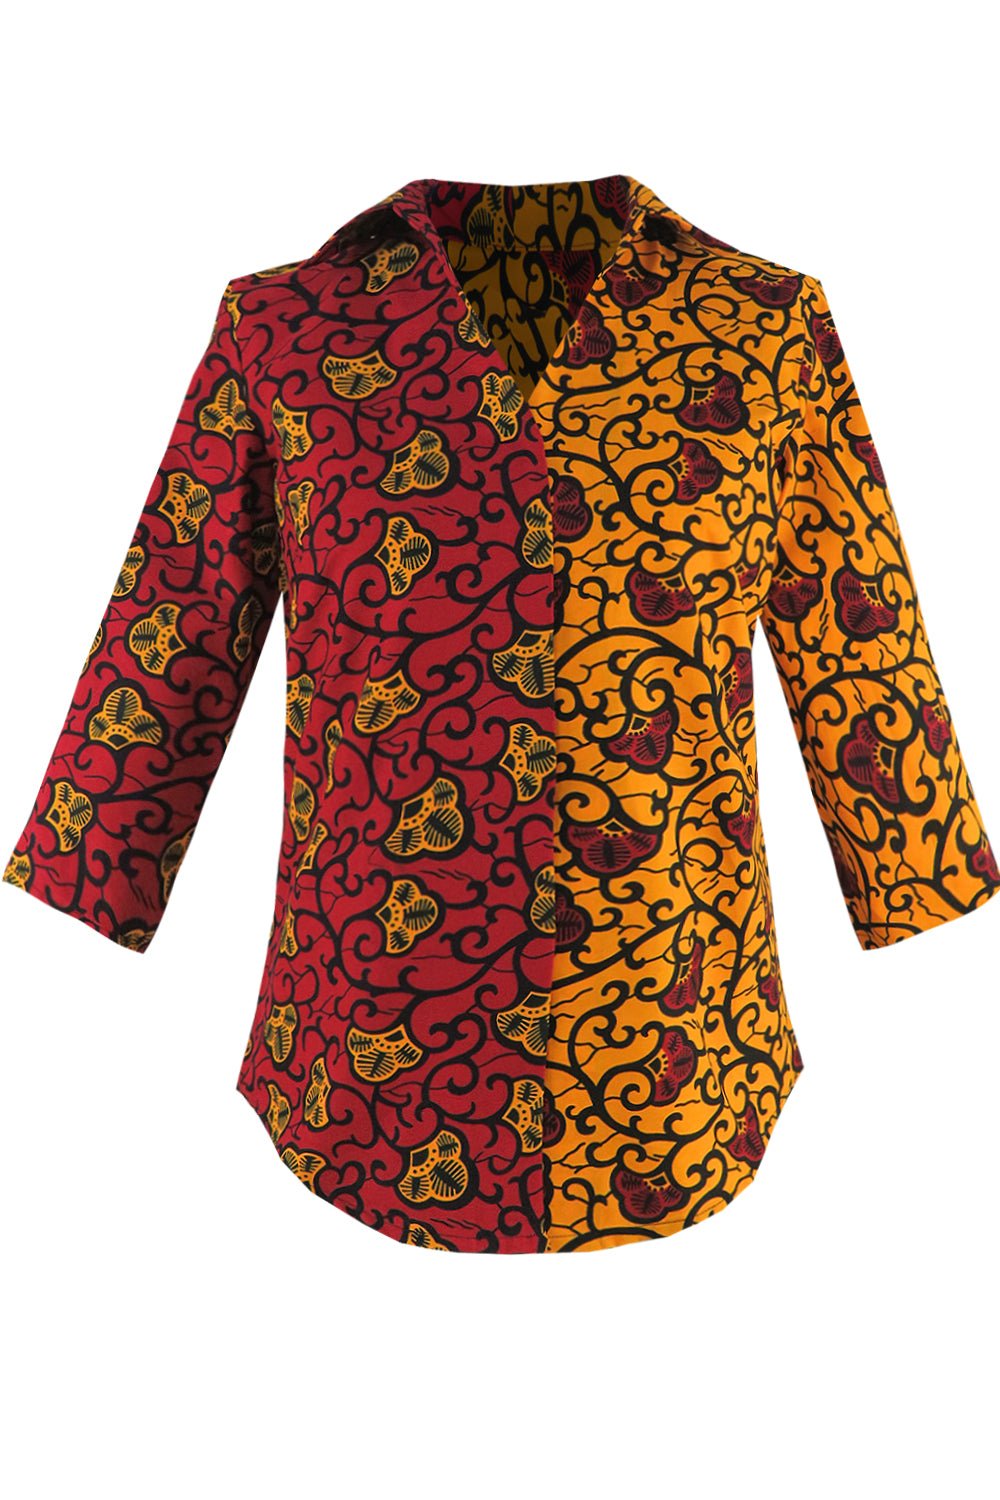 African Print Shirt for Women - Bynelo